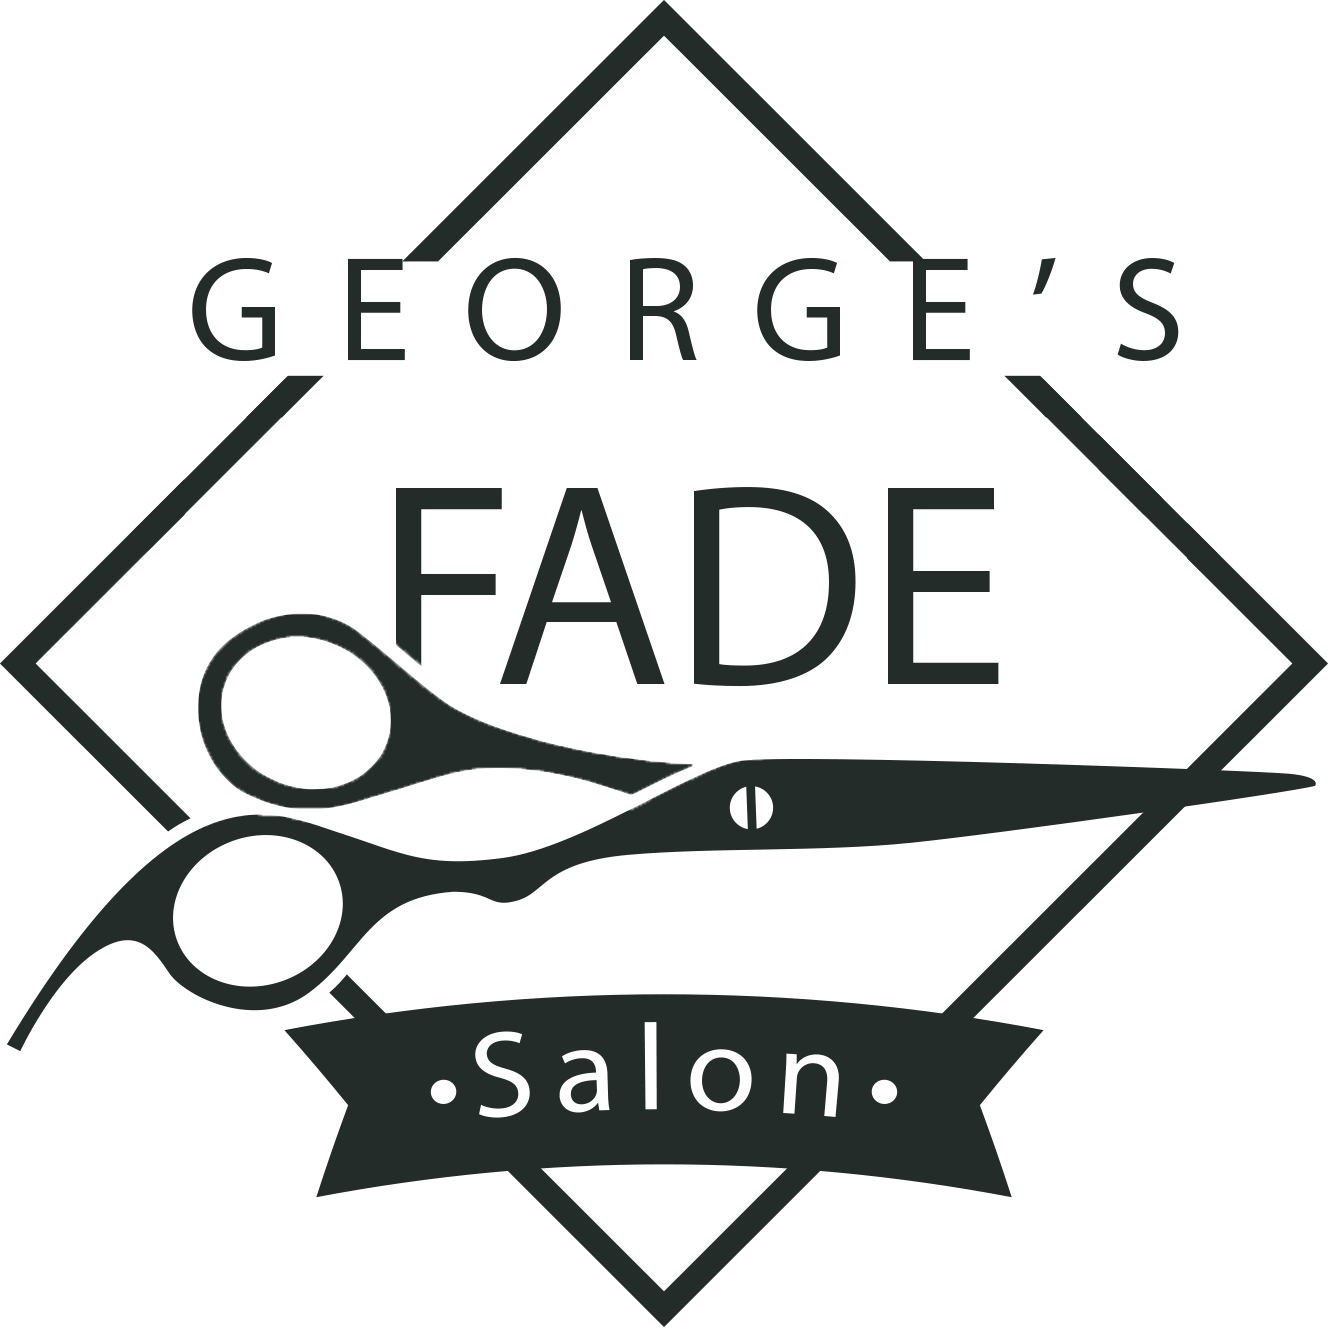 George's Fade Salons